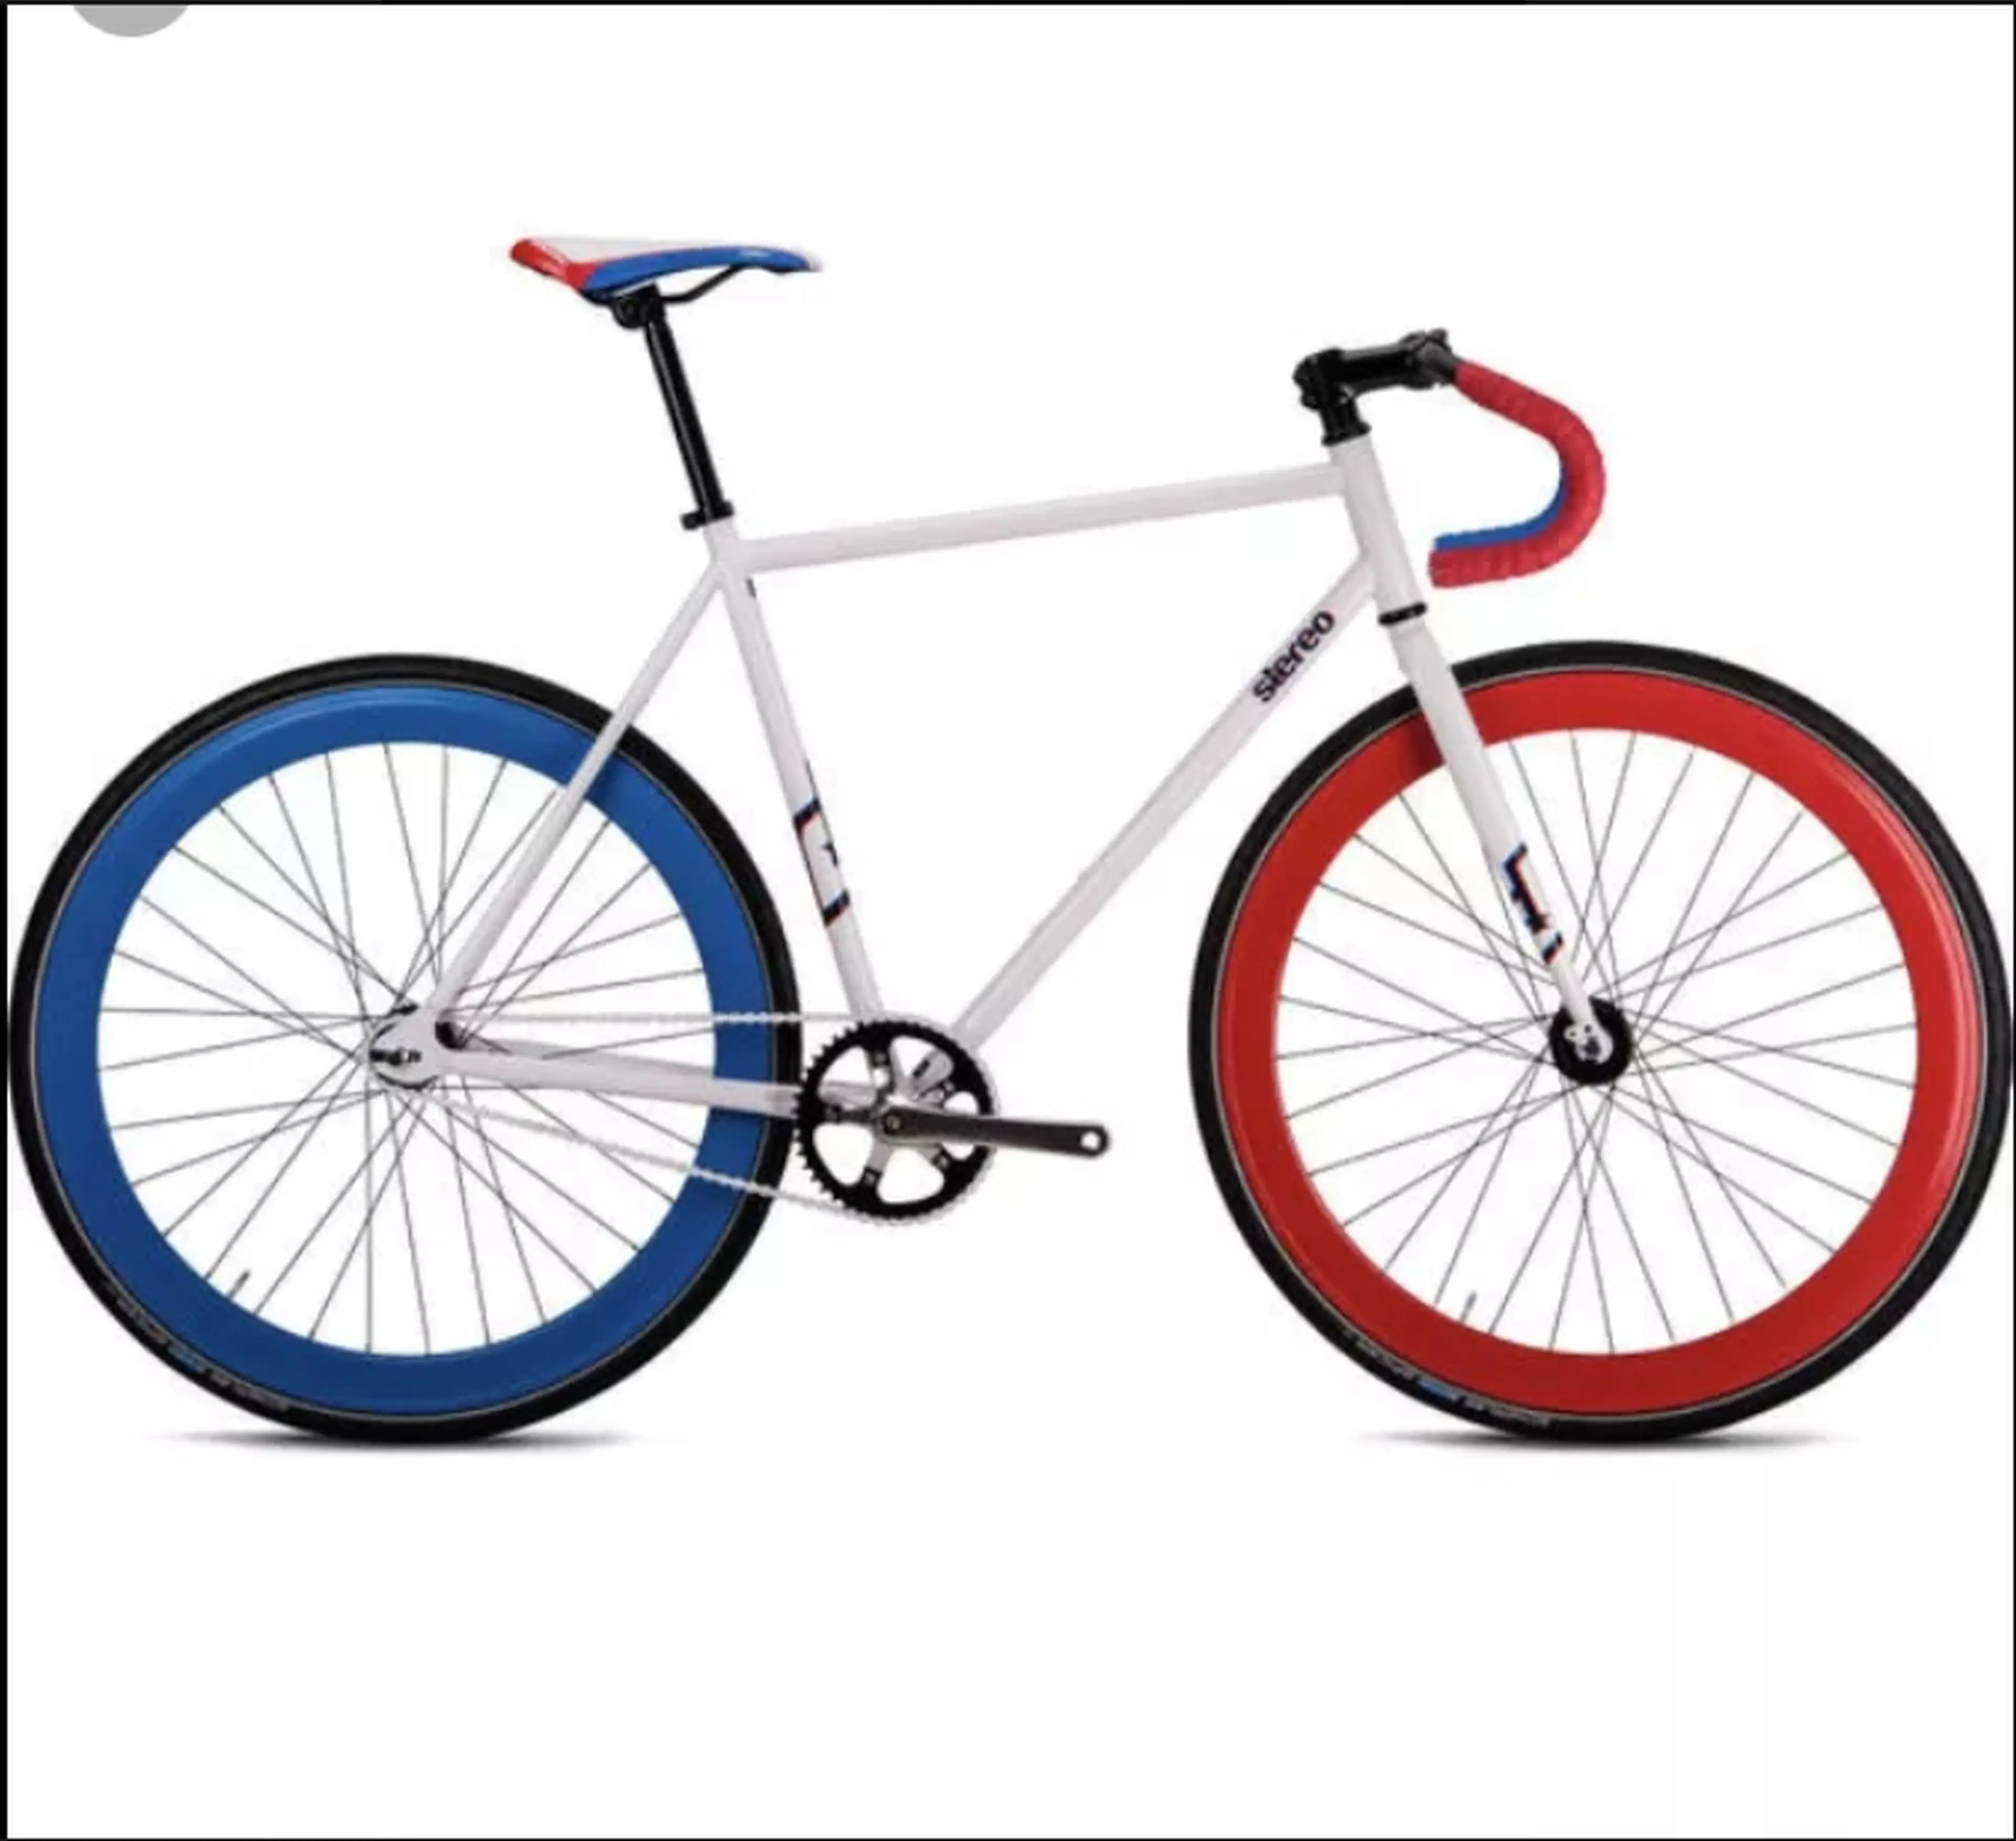 1. Bicicleta Drag Stereo fixie/single speed